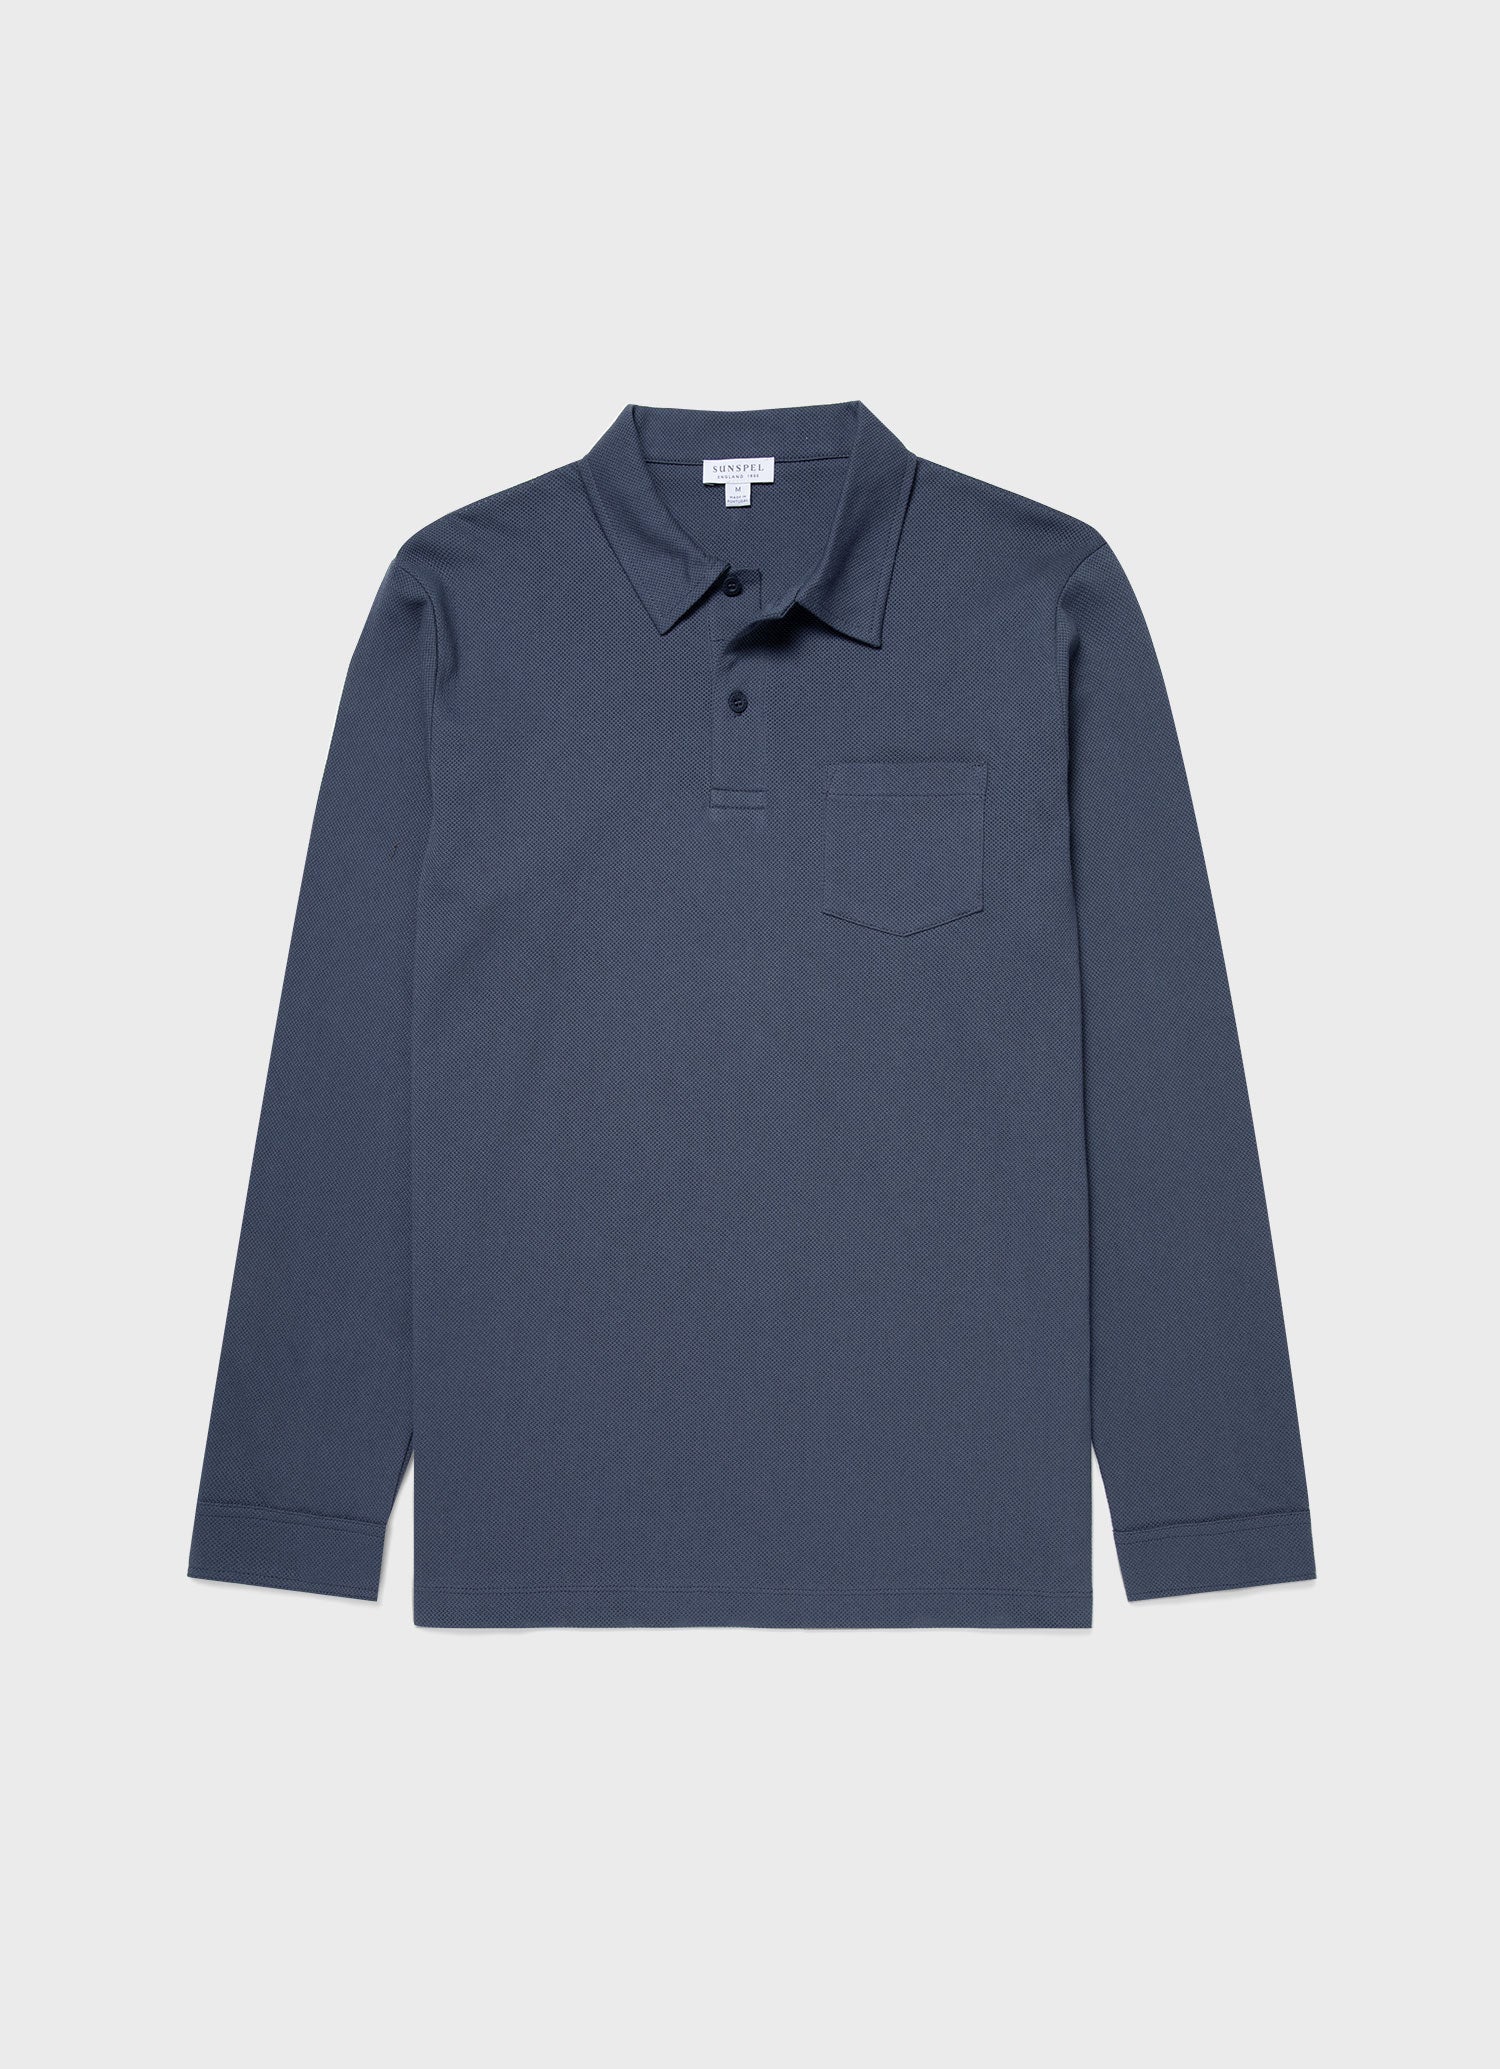 Men's Long Sleeve Riviera Polo Shirt in Slate Blue